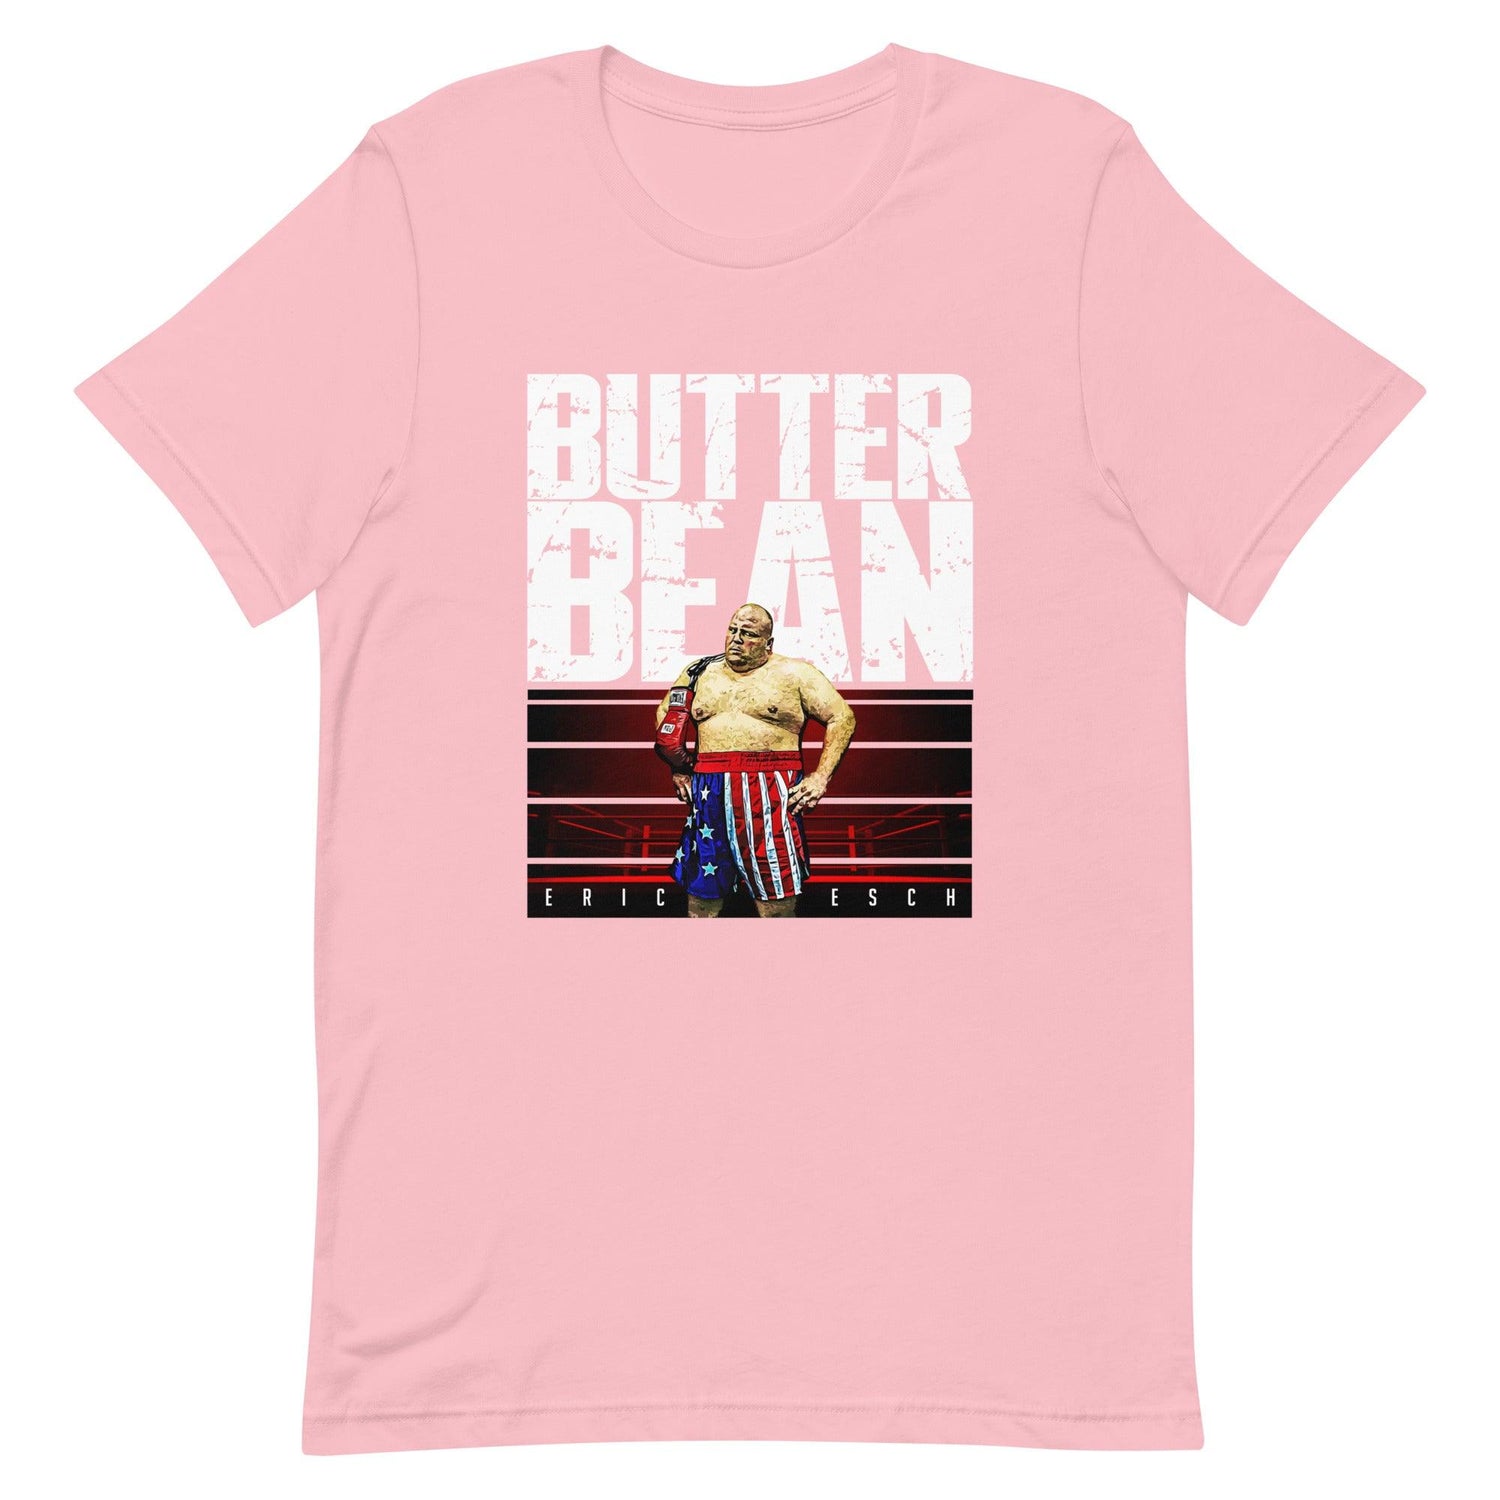 Butterbean "Fight Night" t-shirt - Fan Arch